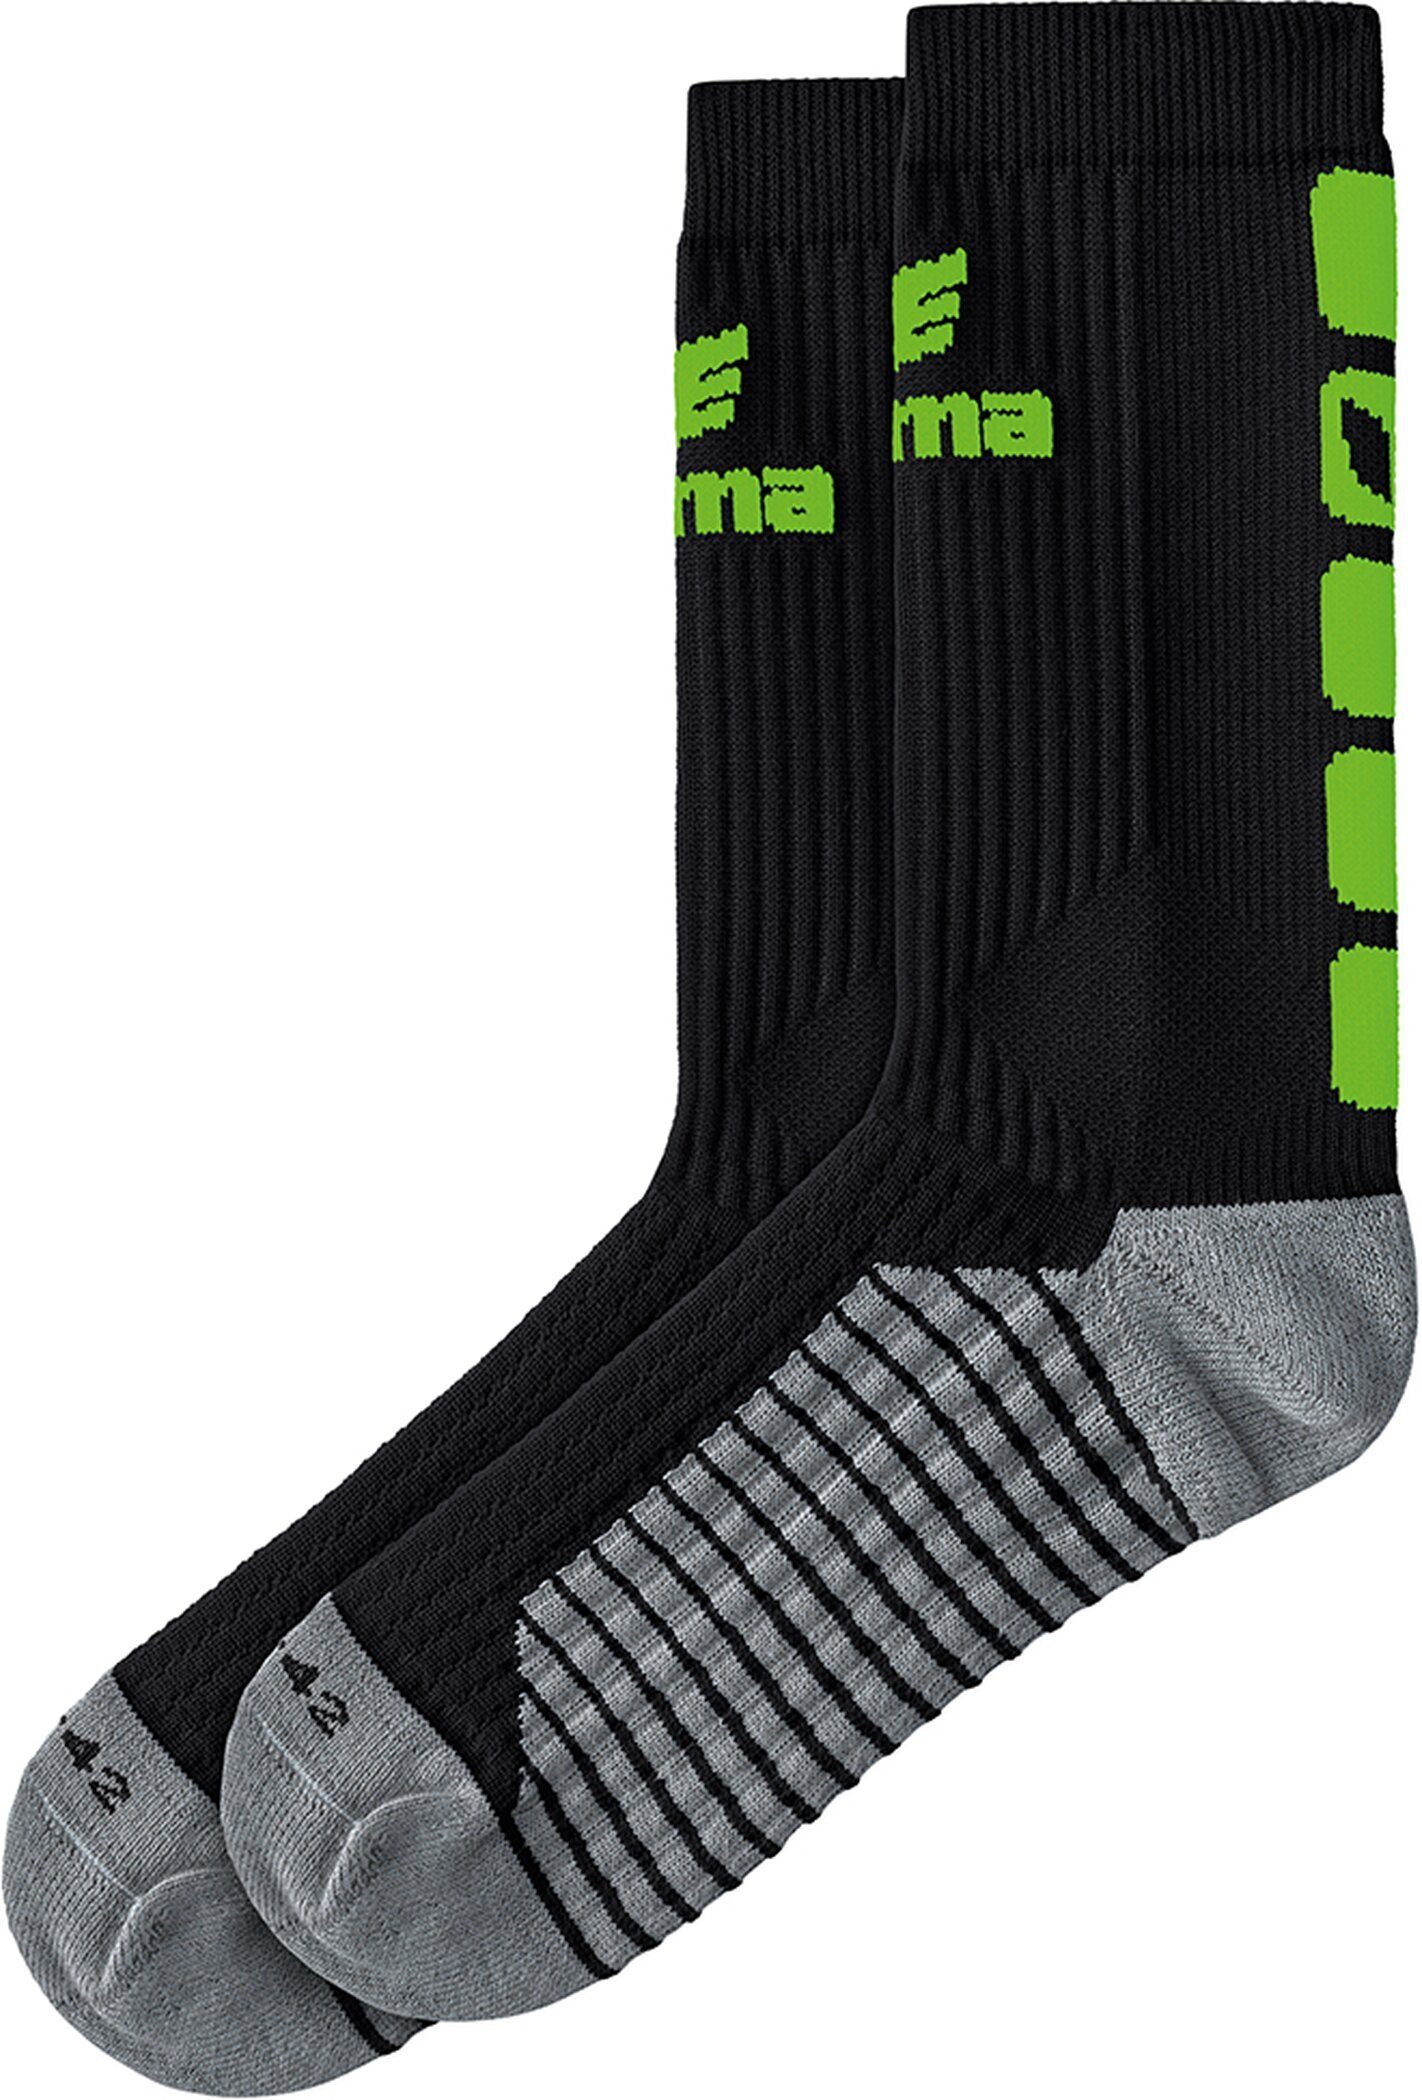 Erima Sportsocken 5-C socks black/green gecko